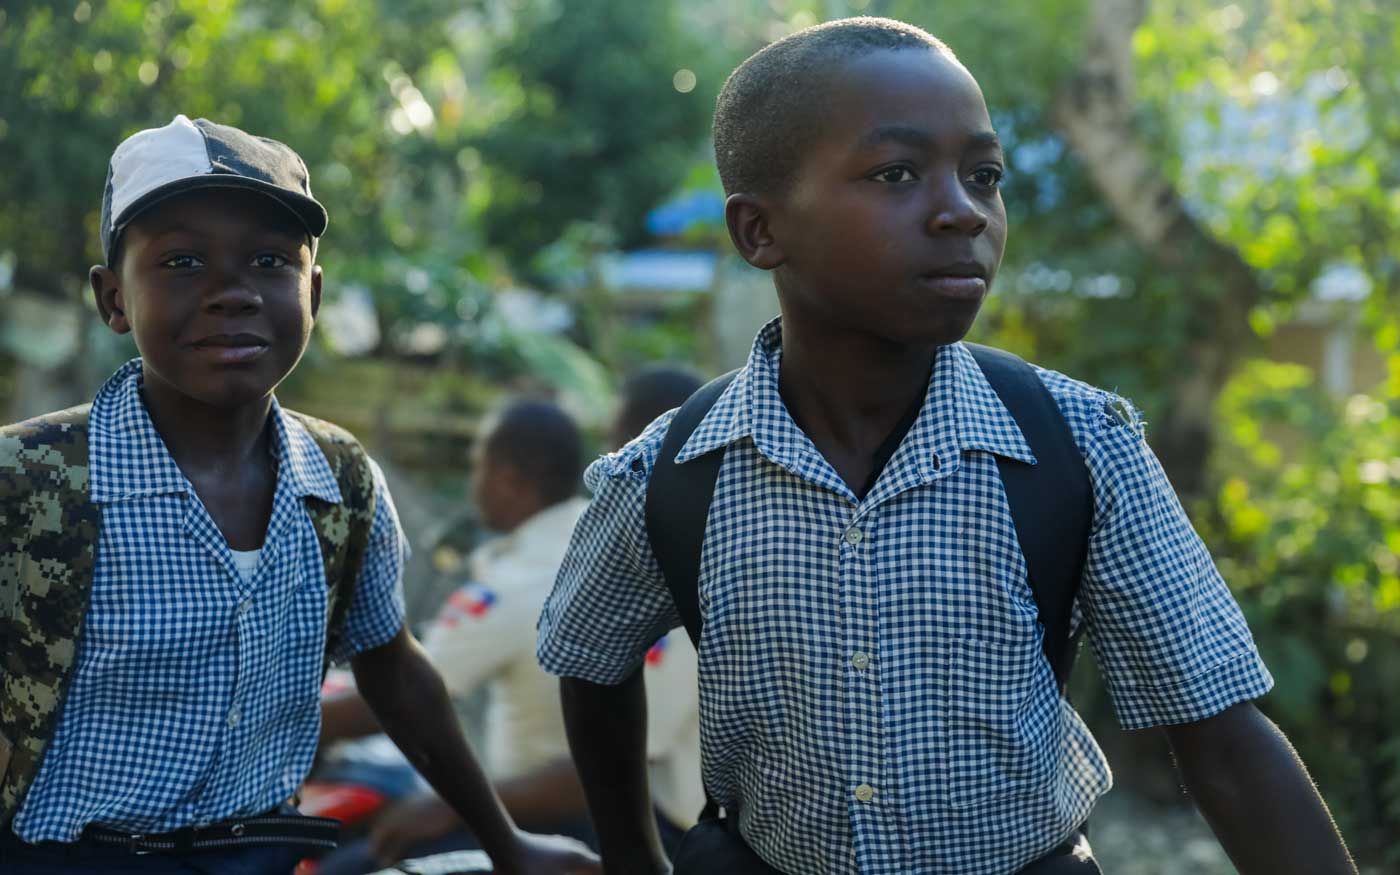 haitian school boys in uniforms